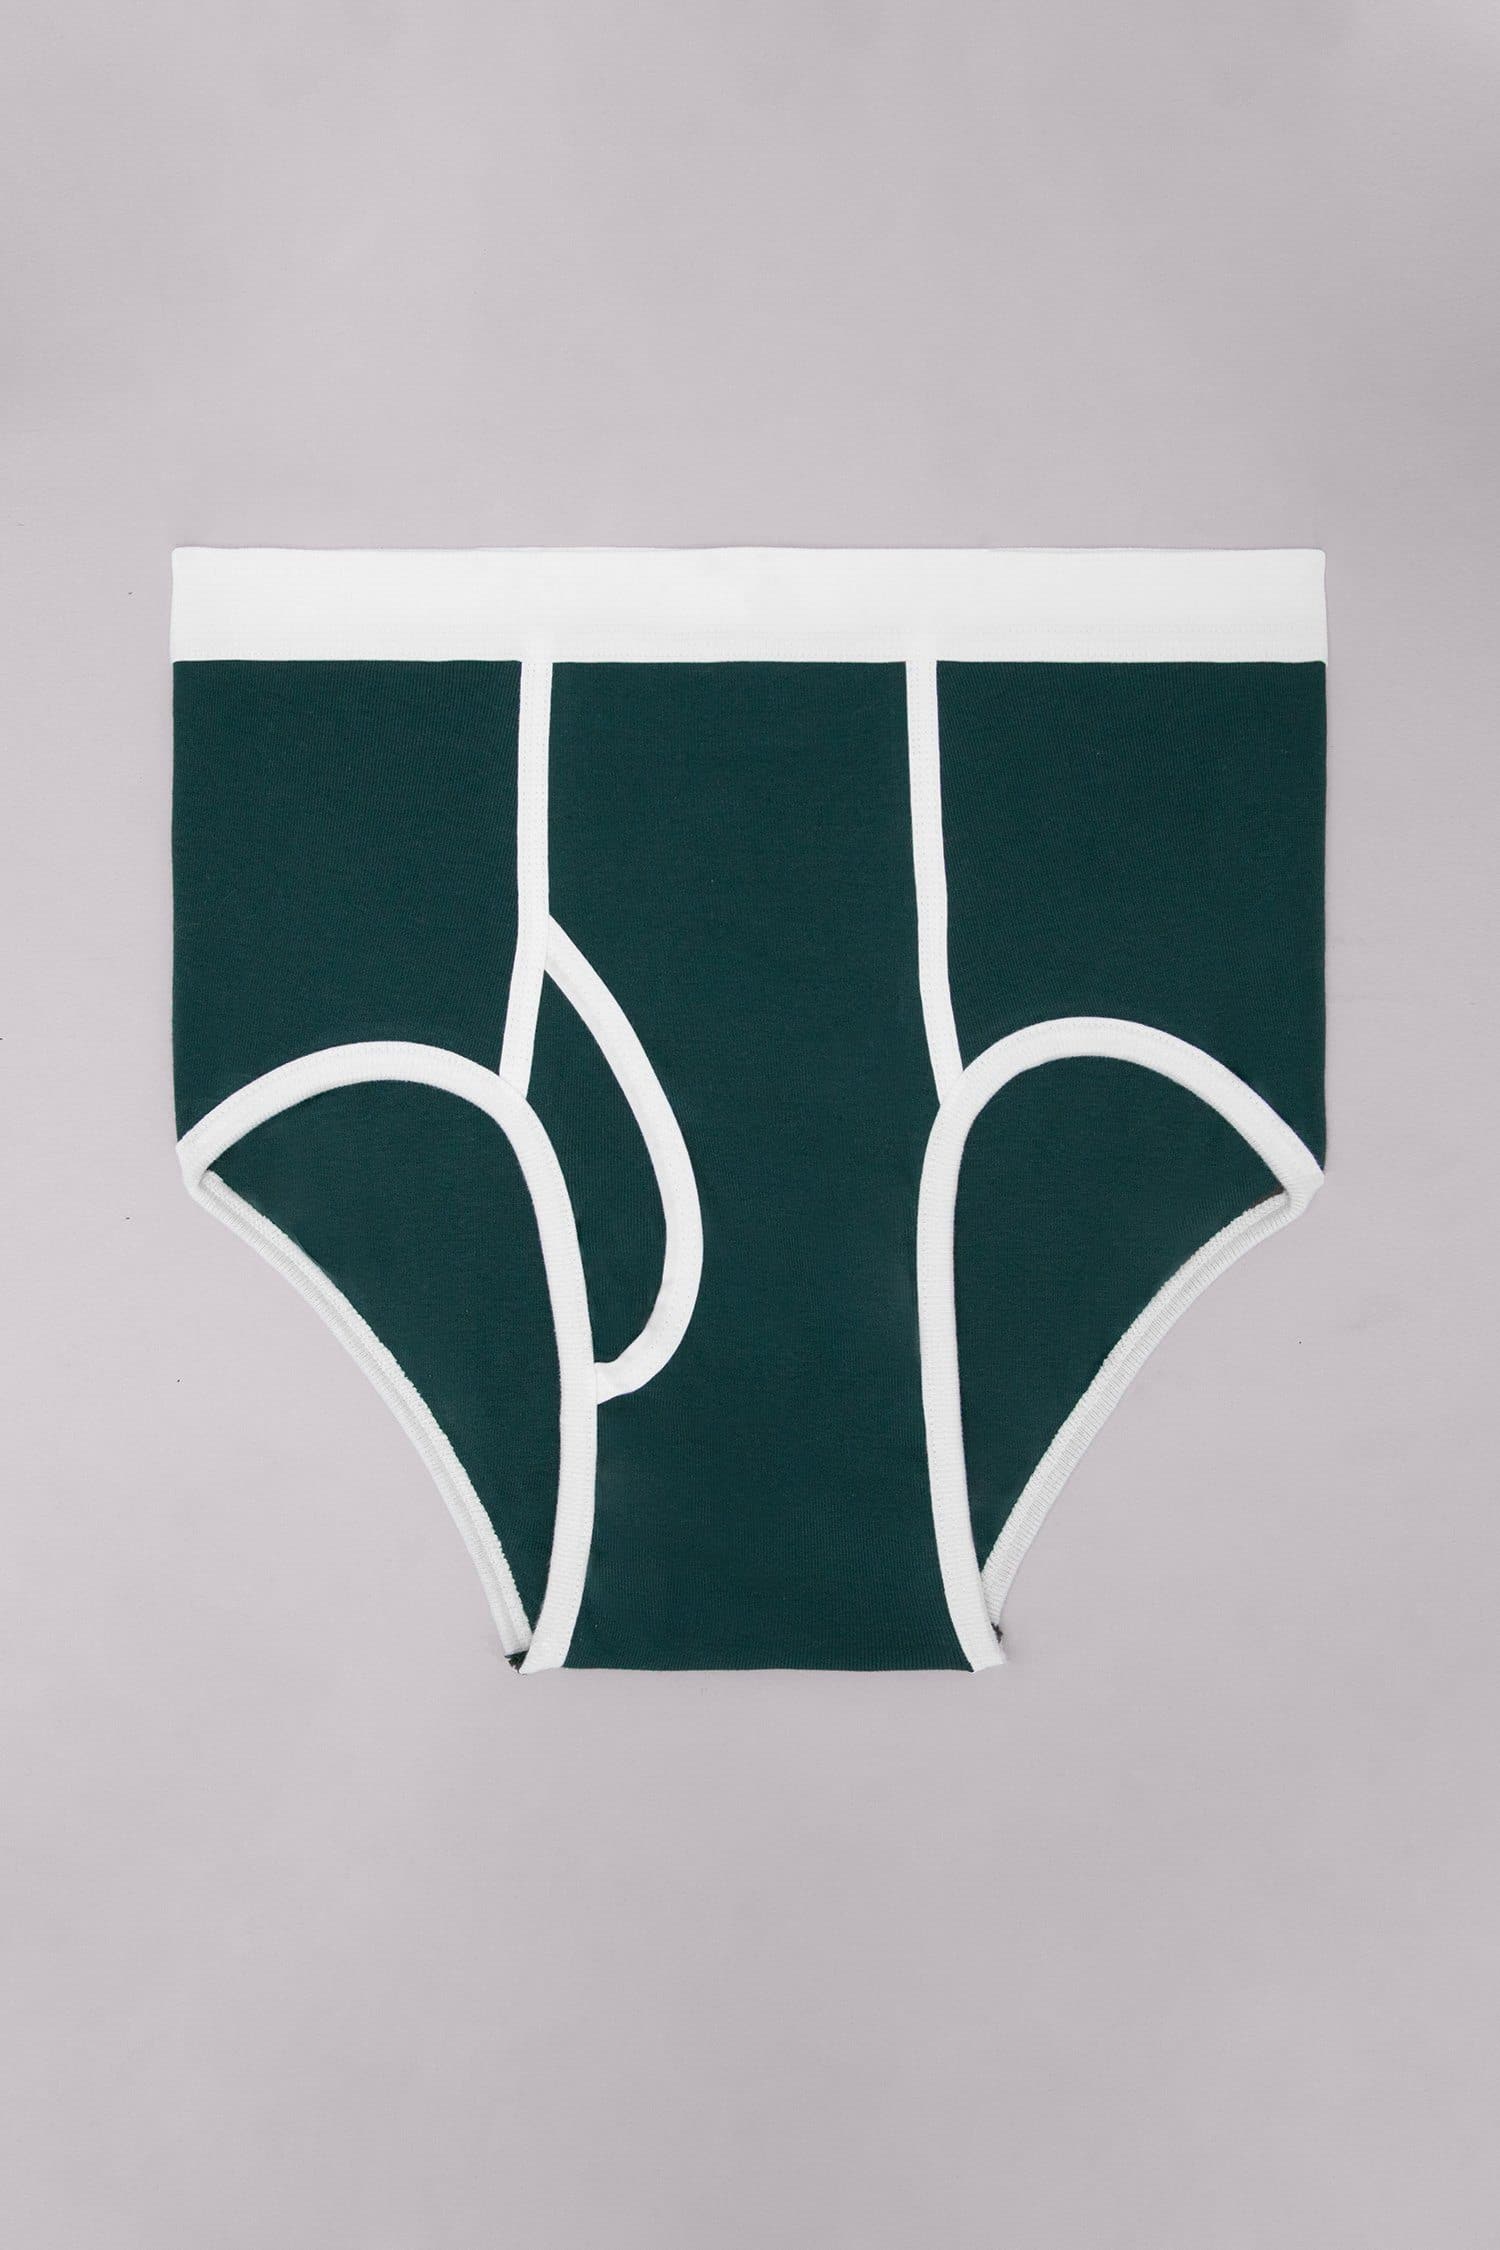 Buy American Apparel Unisex Baby Rib Briefs/Underwear (M) (Red